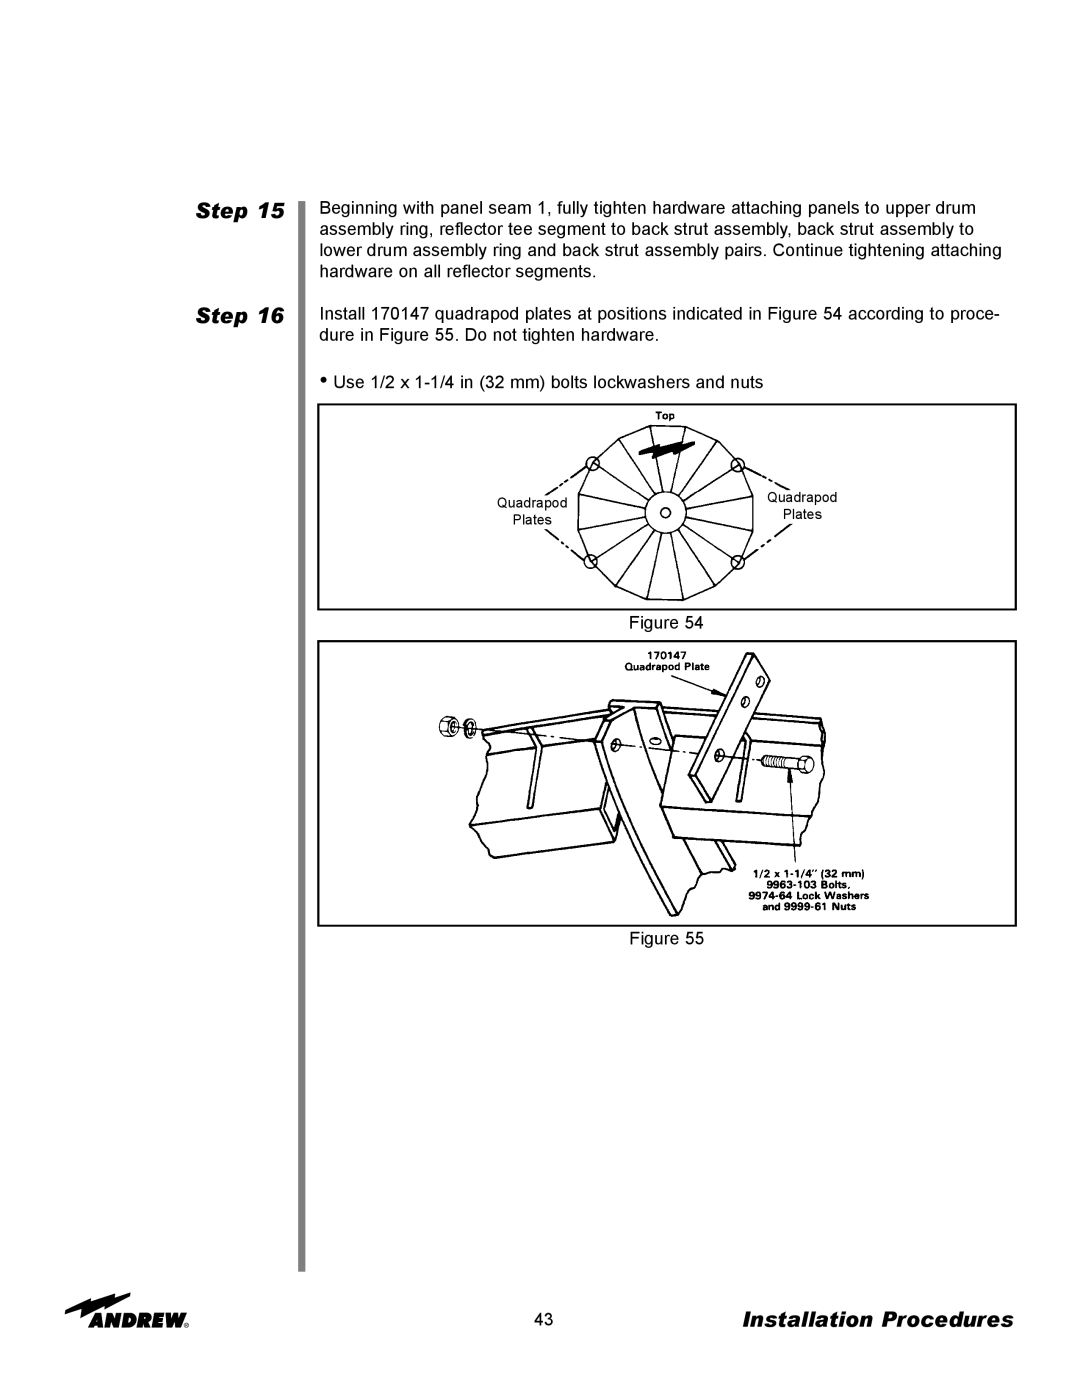 Andrew ES73 manual Step Step, Installation Procedures, Figure Figure 